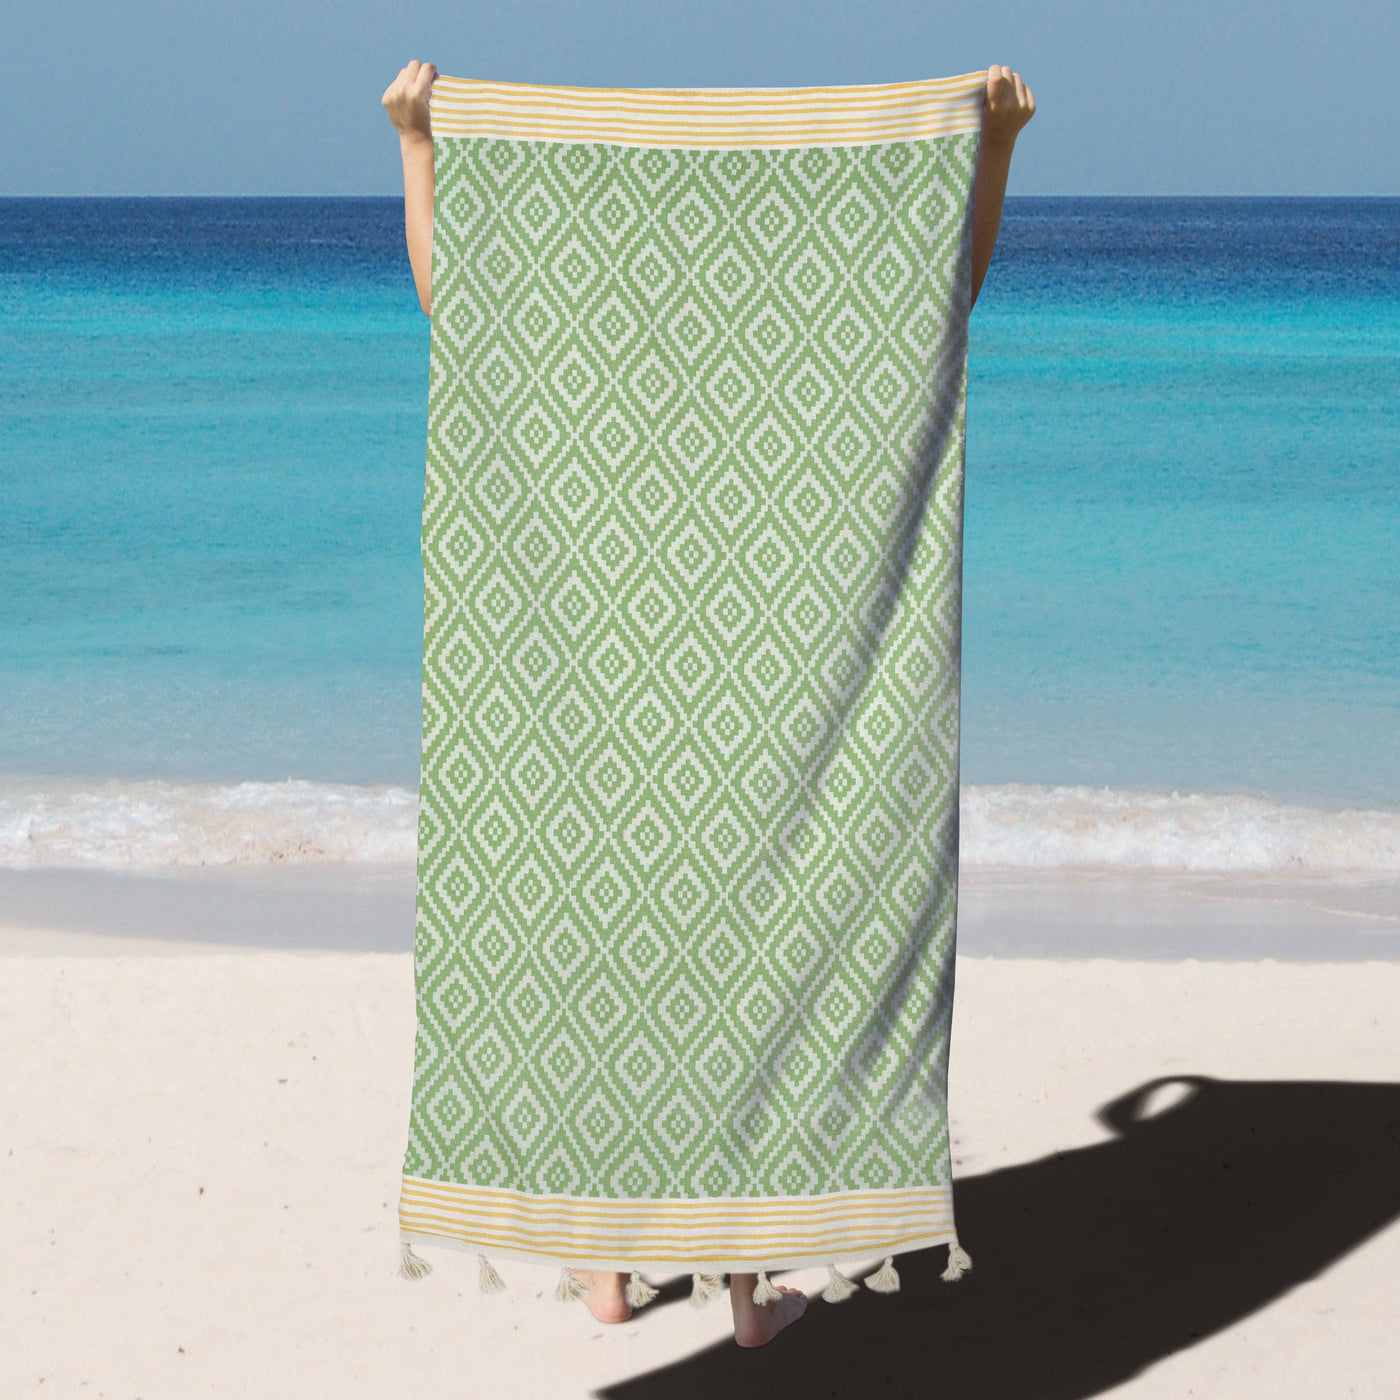 Sandy Beach Towel, Green - Orange Beach Towels sazy.com